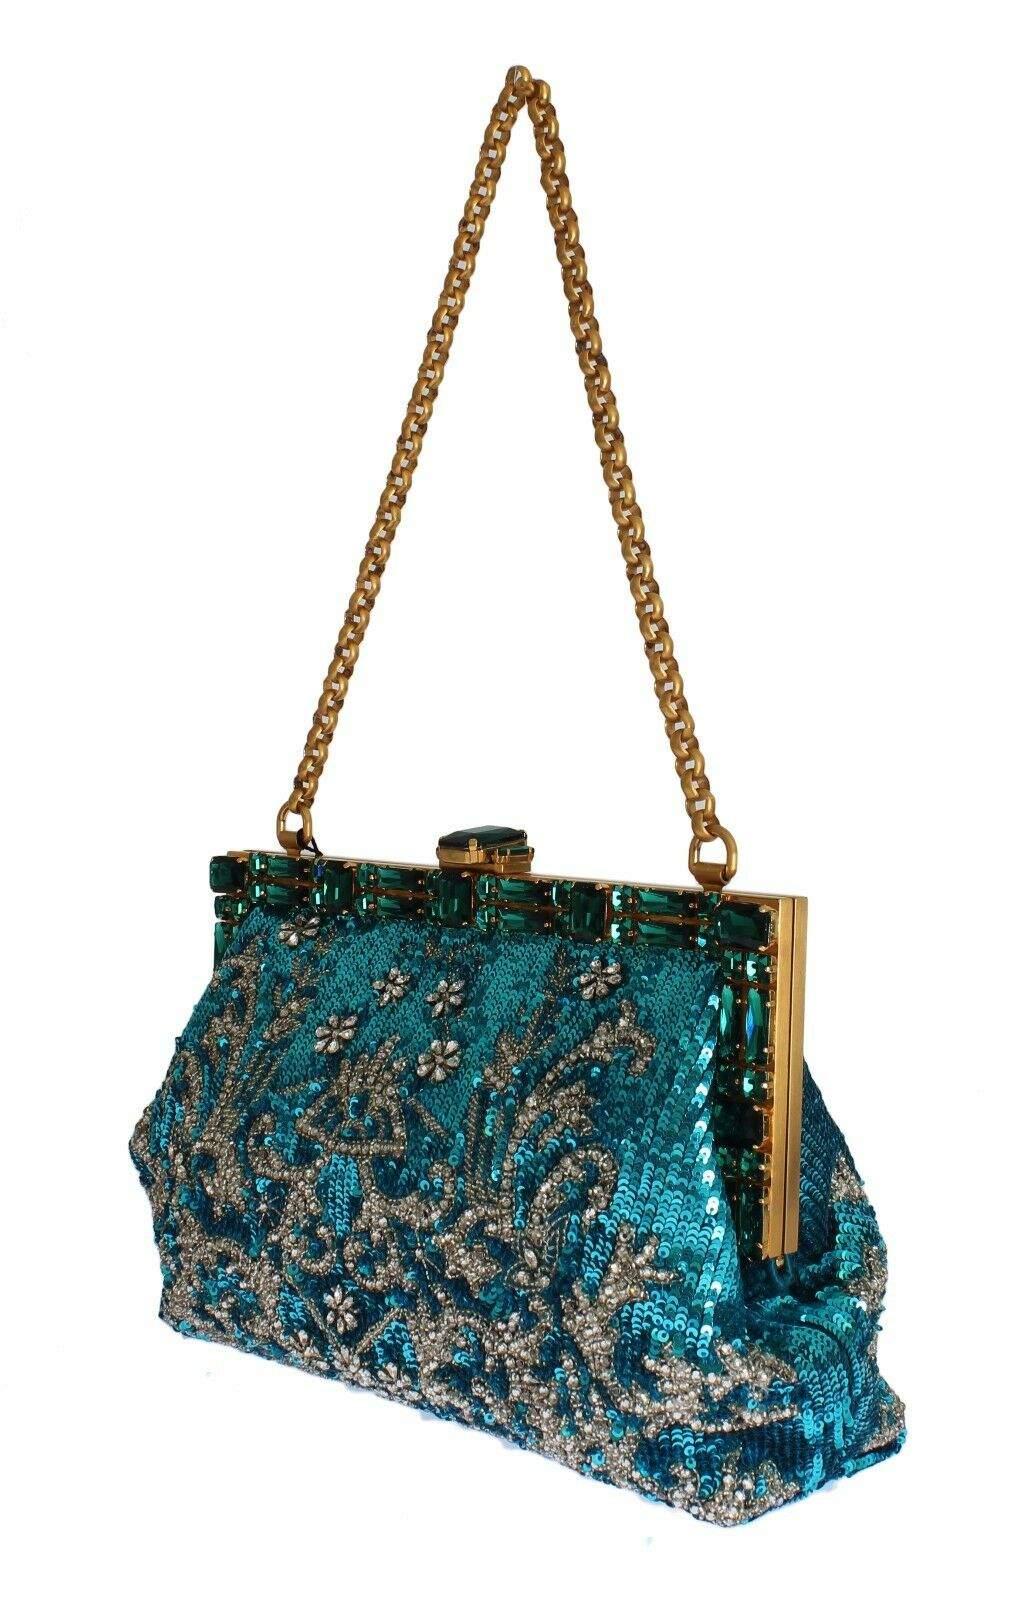 Dolce & Gabbana Clear Crystal Gold Evening Clutch Purse in Blue | Lyst UK